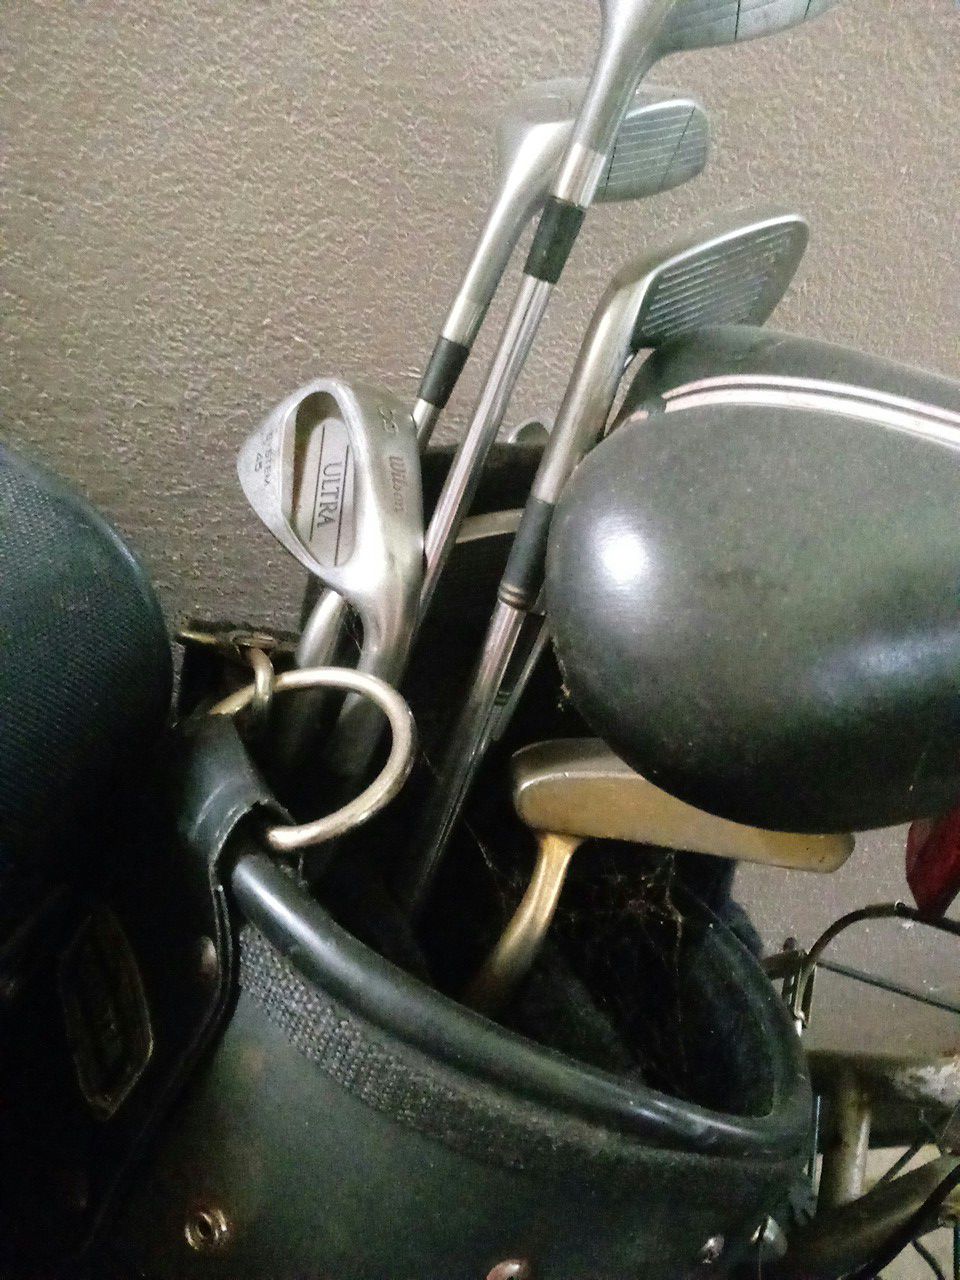 Golf clubs & bag